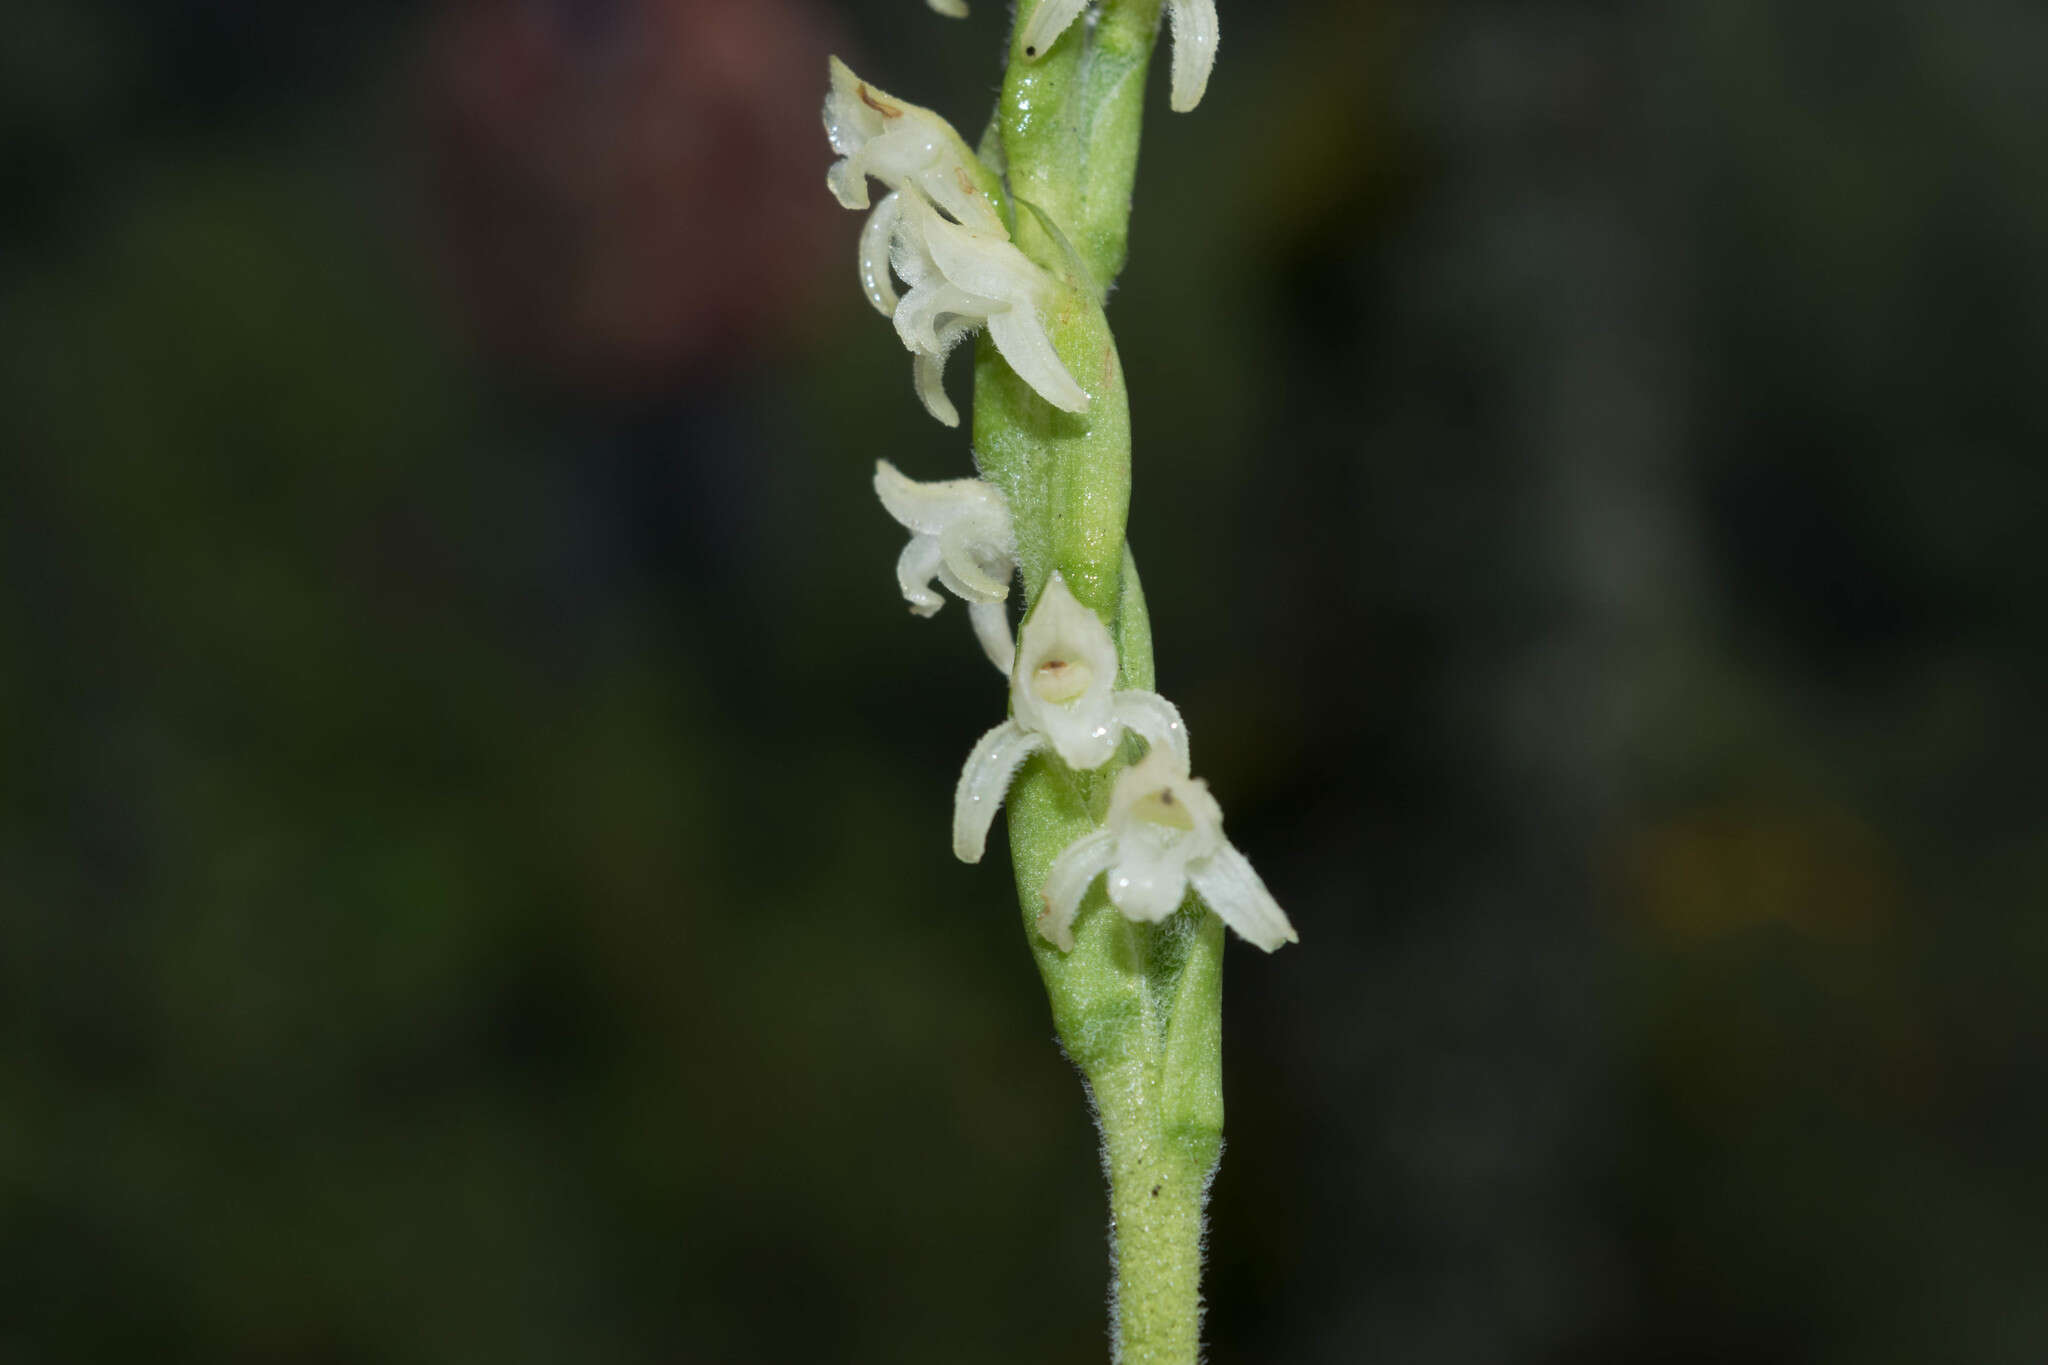 Image of Kionophyton seminuda (Schltr.) Garay